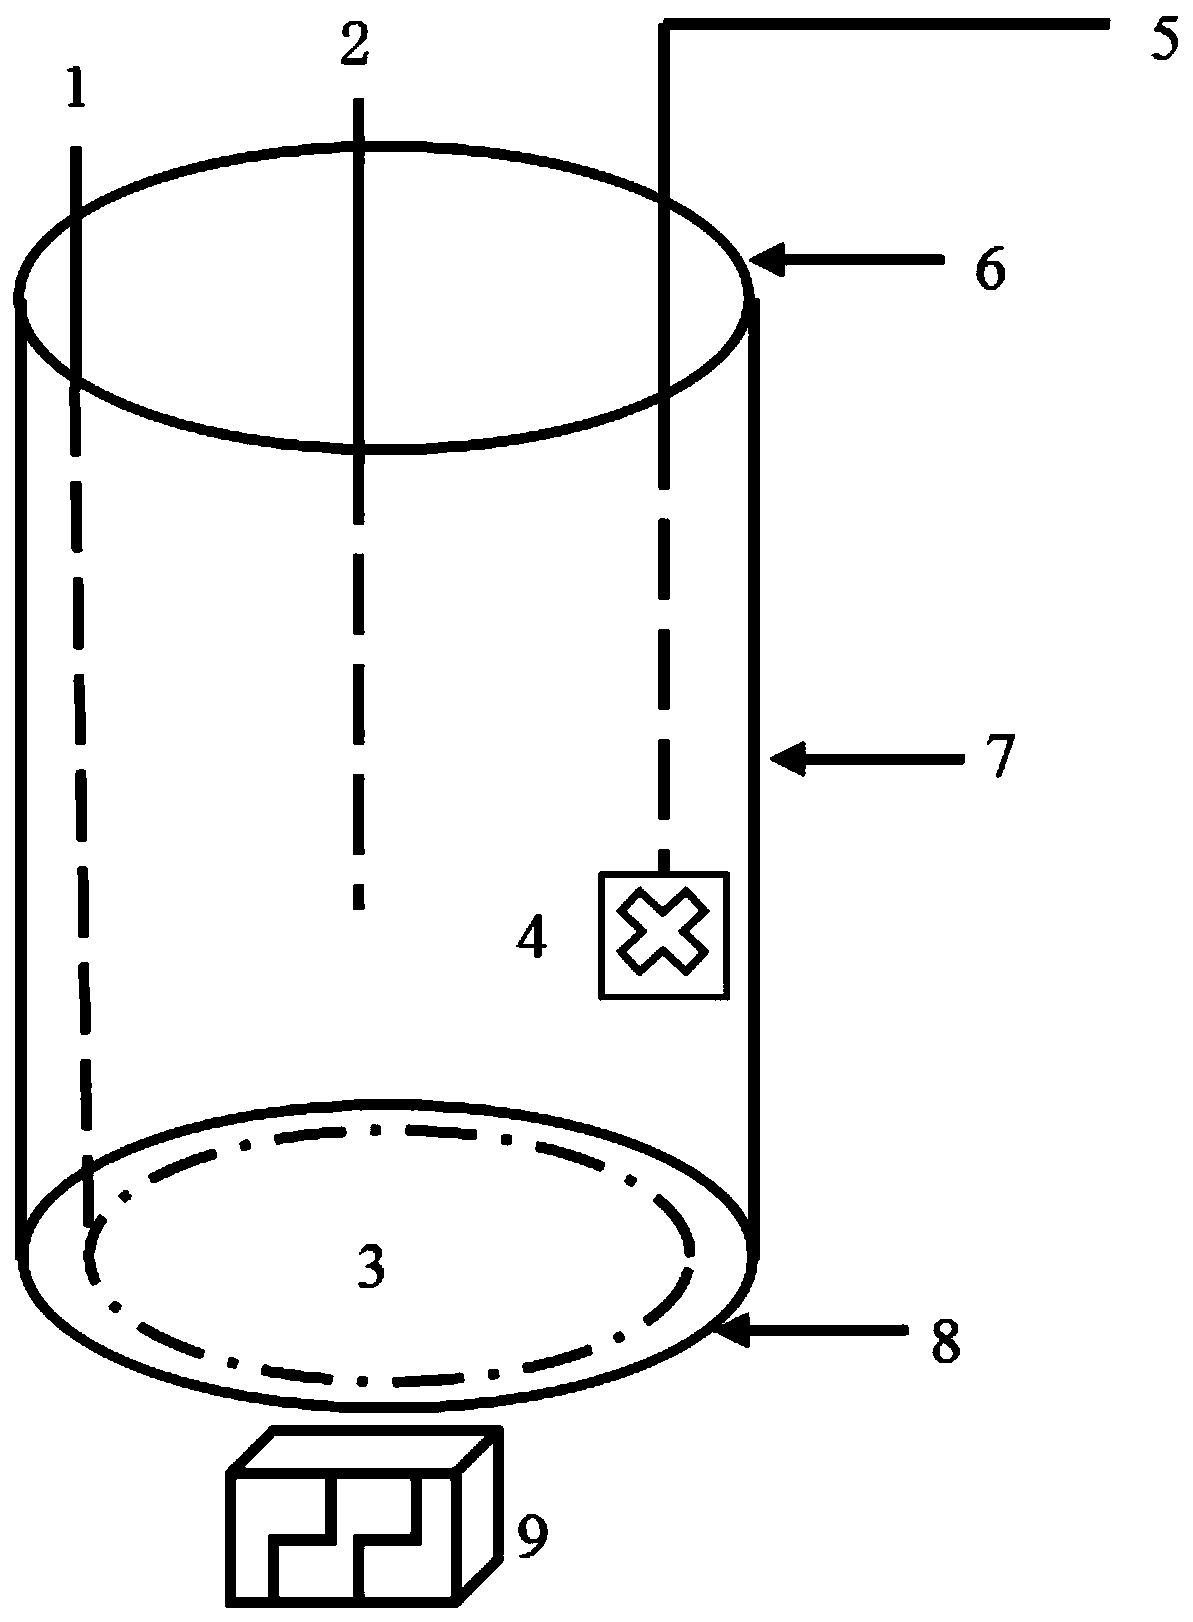 Measuring device and method of emission flux of soil nitrous acid (HONO)